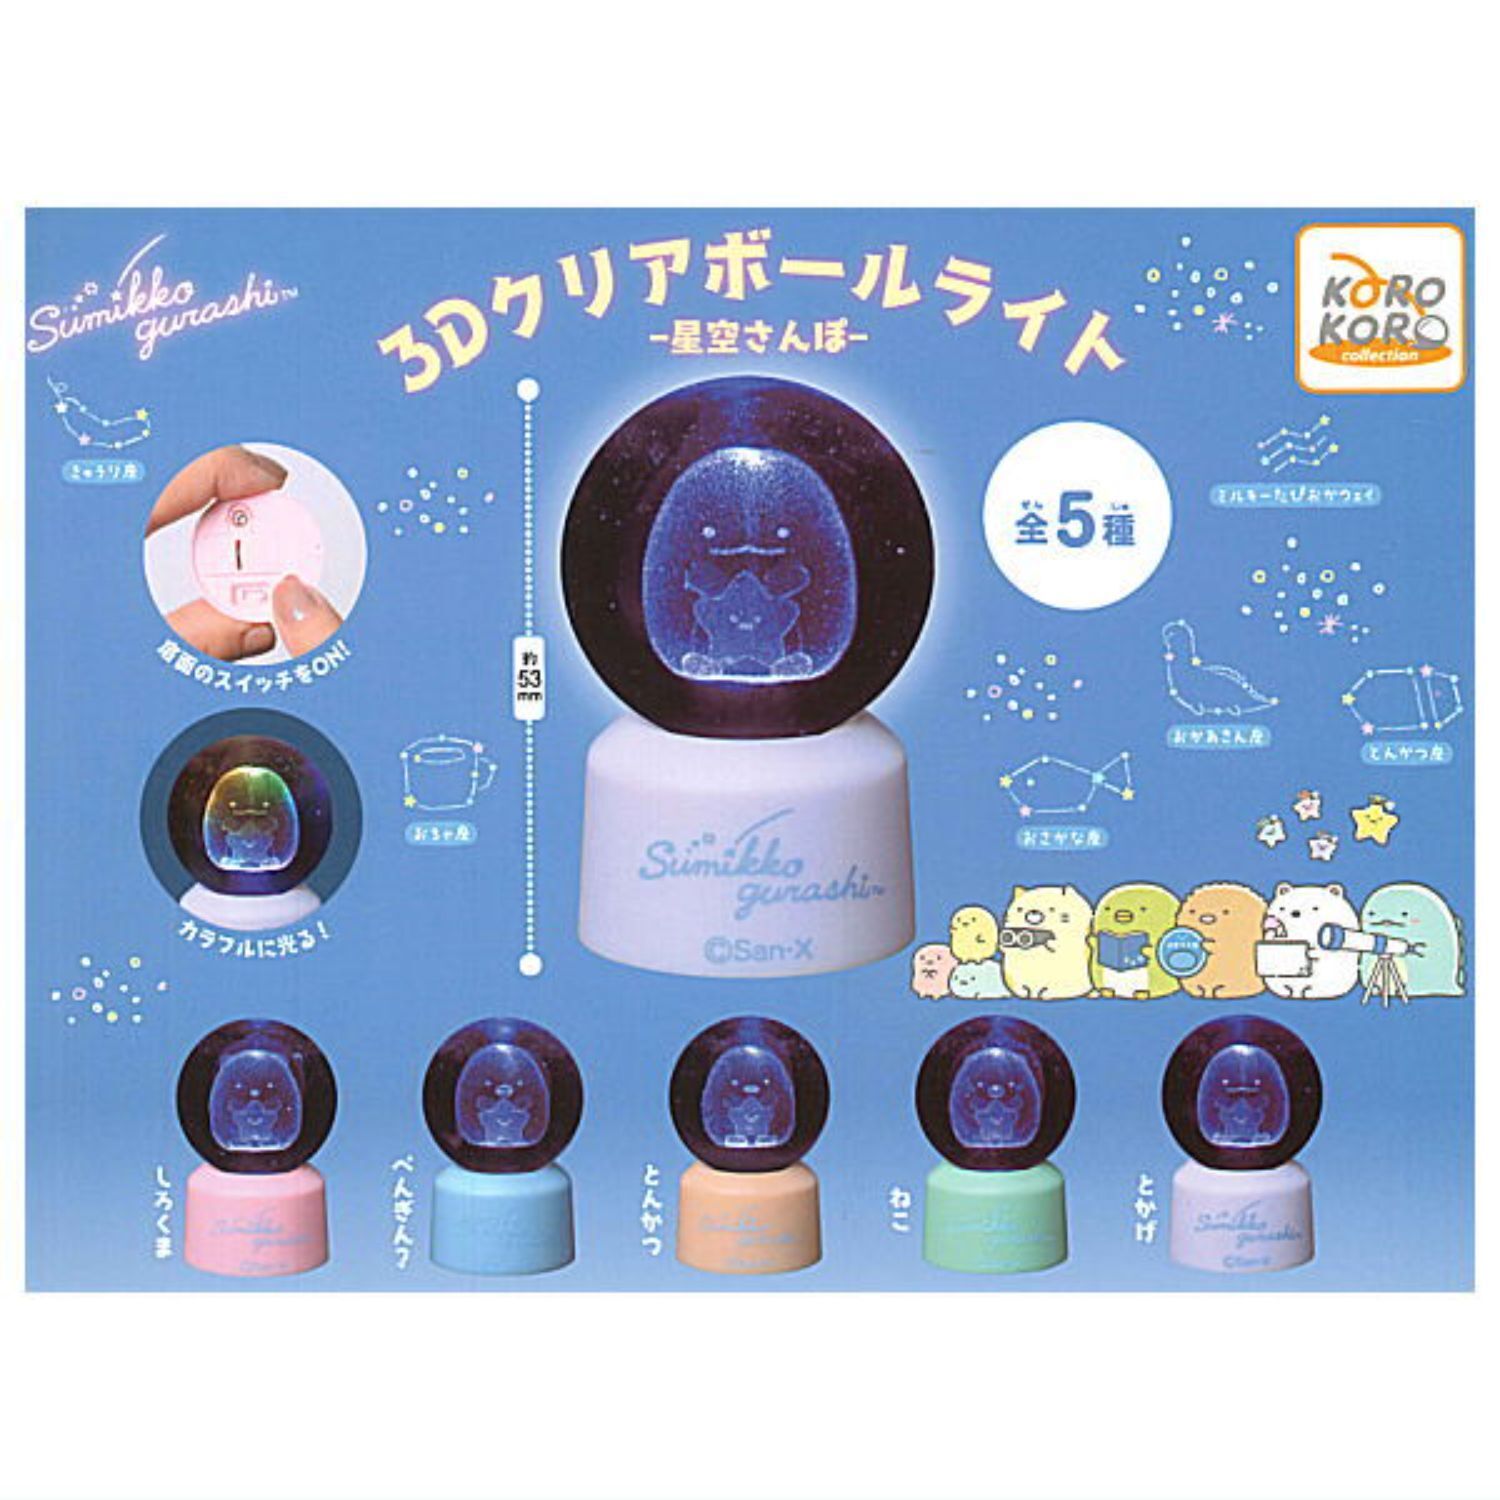 Sumikko Gurashi 3D clear ball light Capsule Toy 5 Types Full Comp Set Gacha New